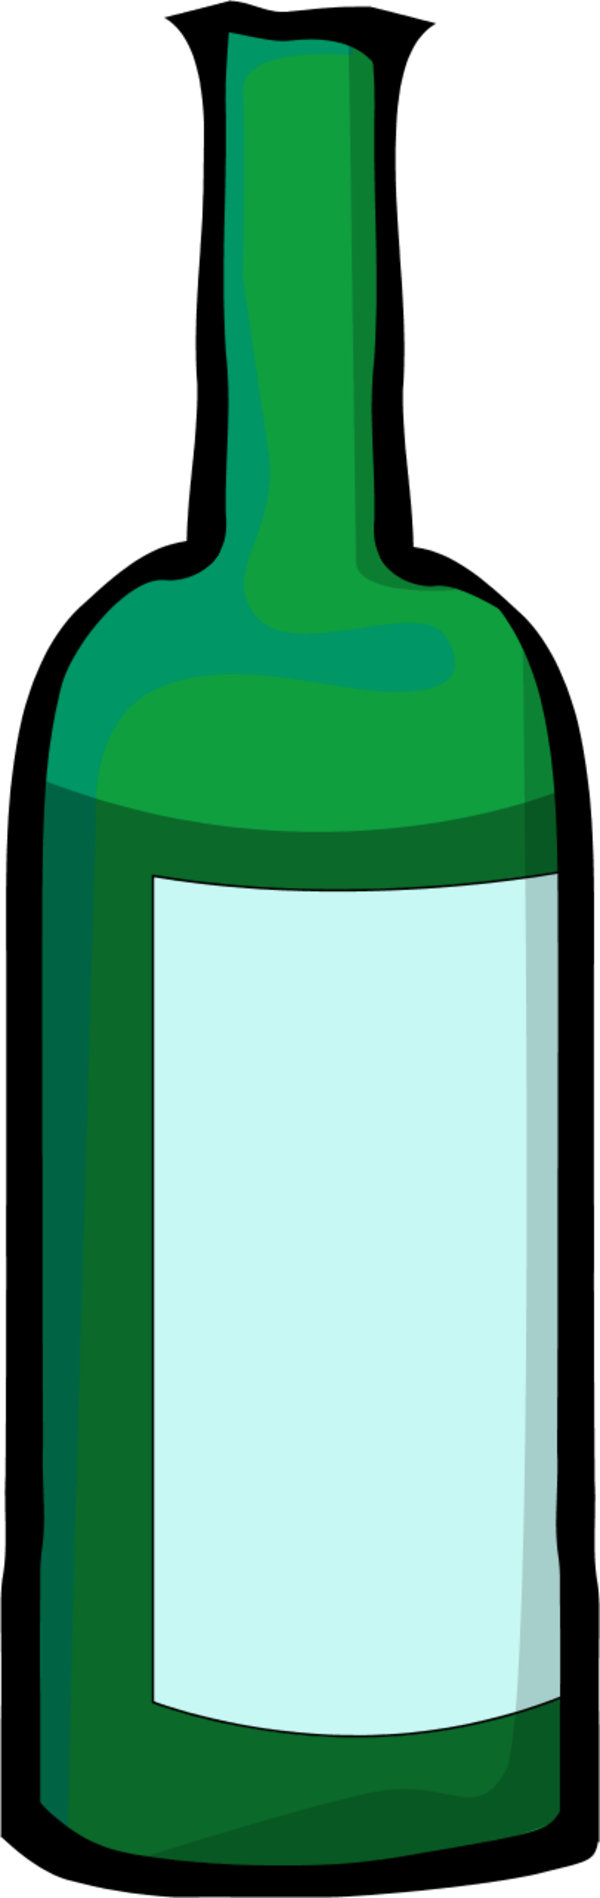 Bottle Clipart Green Bottle - Wine Bottle Clip Art (600x1898)